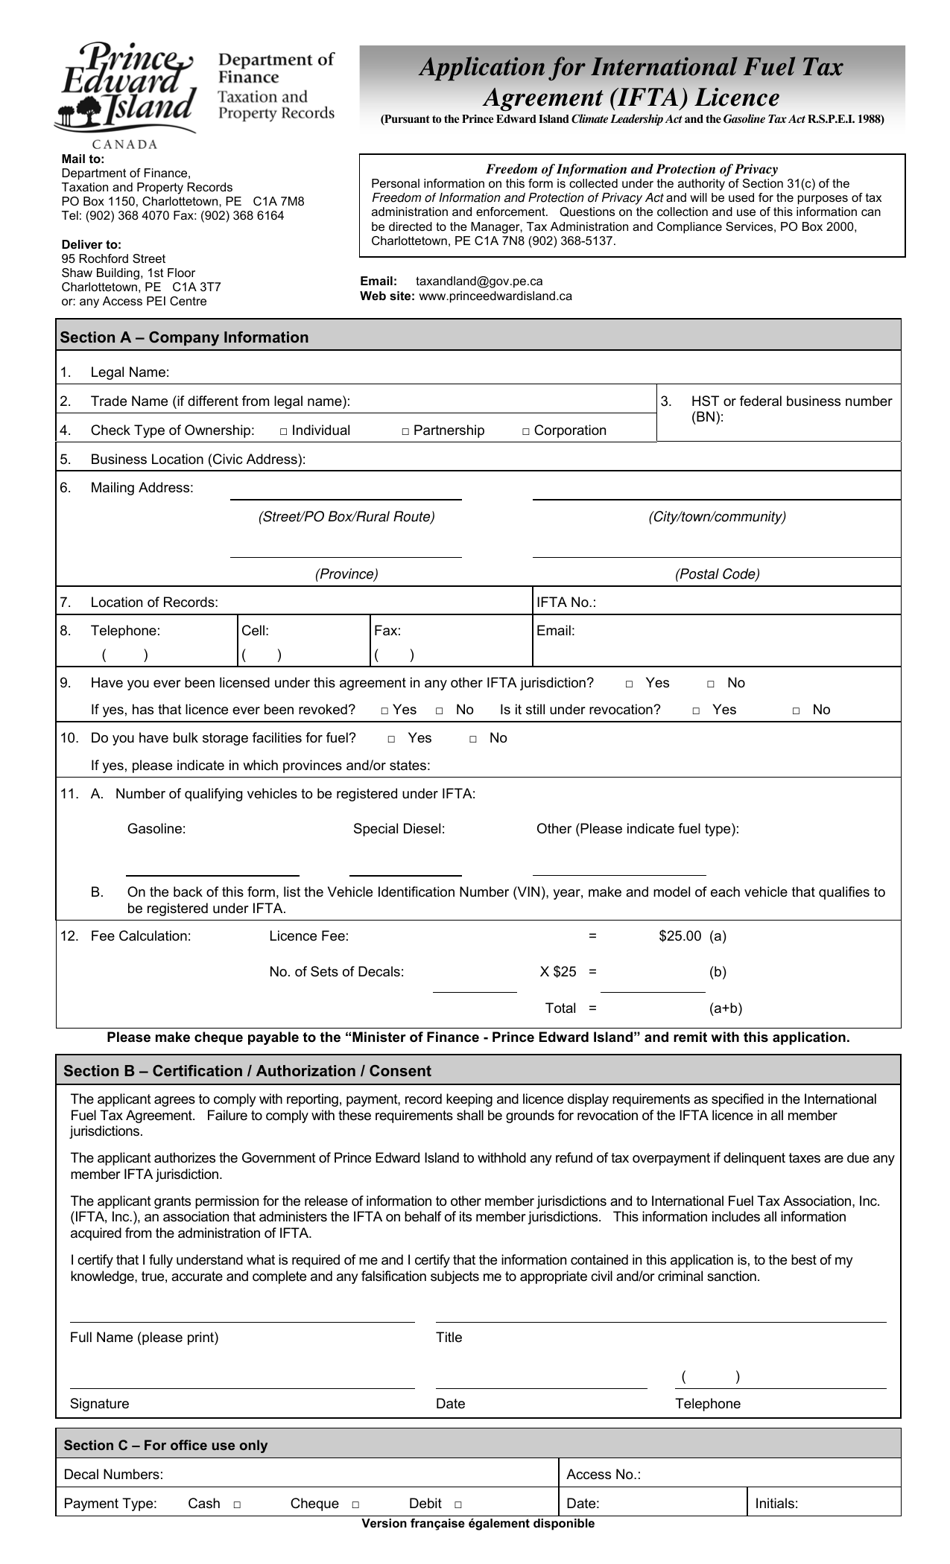 Application for International Fuel Tax Agreement (Ifta) License - Prince Edward Island, Canada, Page 1